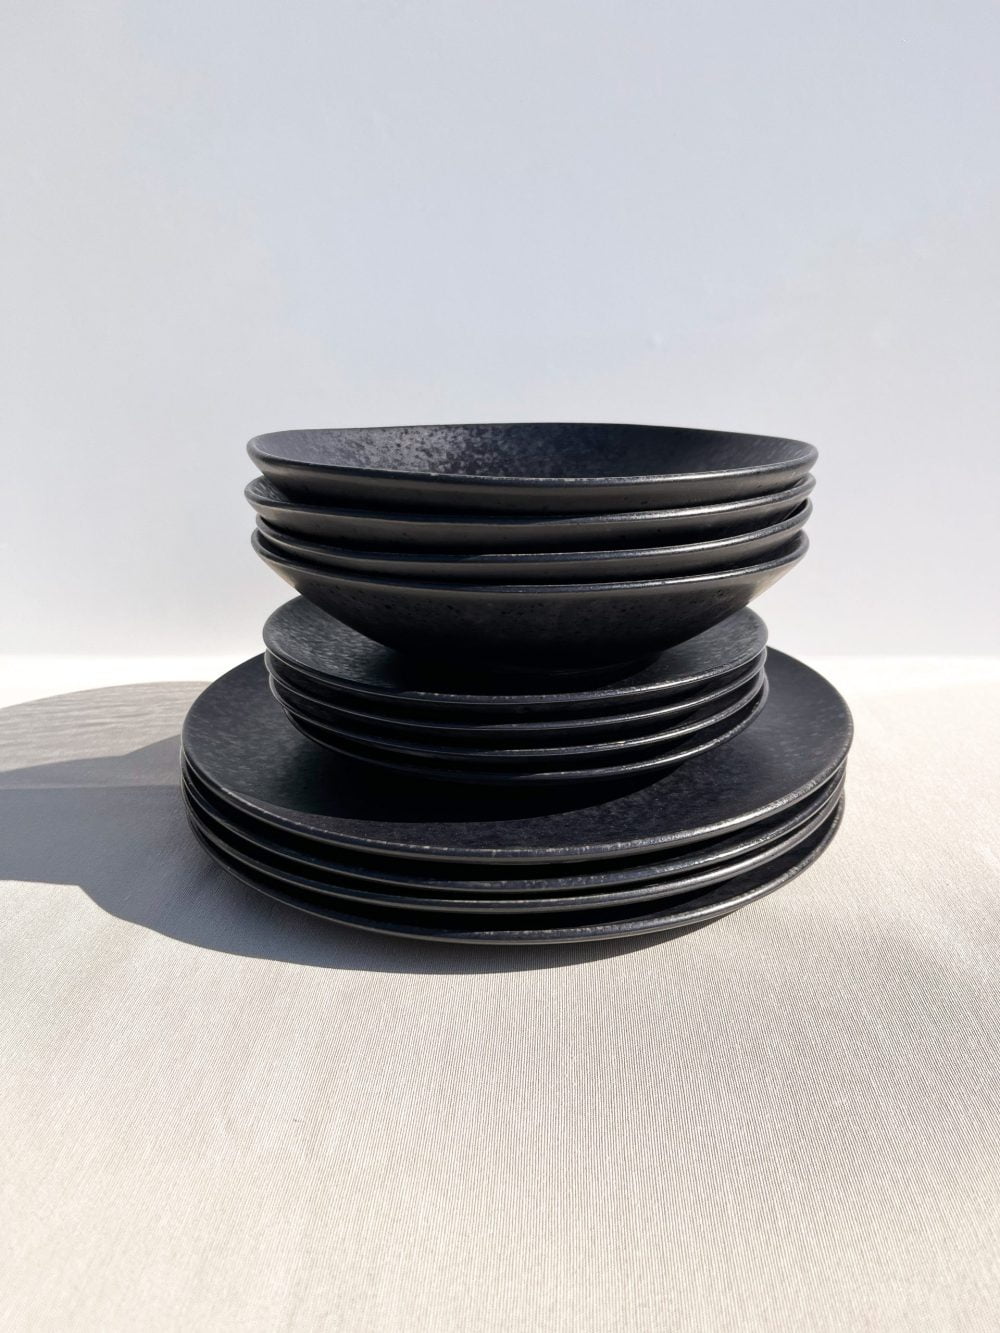 zwarte servies set pastaborden - black stone -handgemaakt keramiek - modern portugees servies bij UNRO